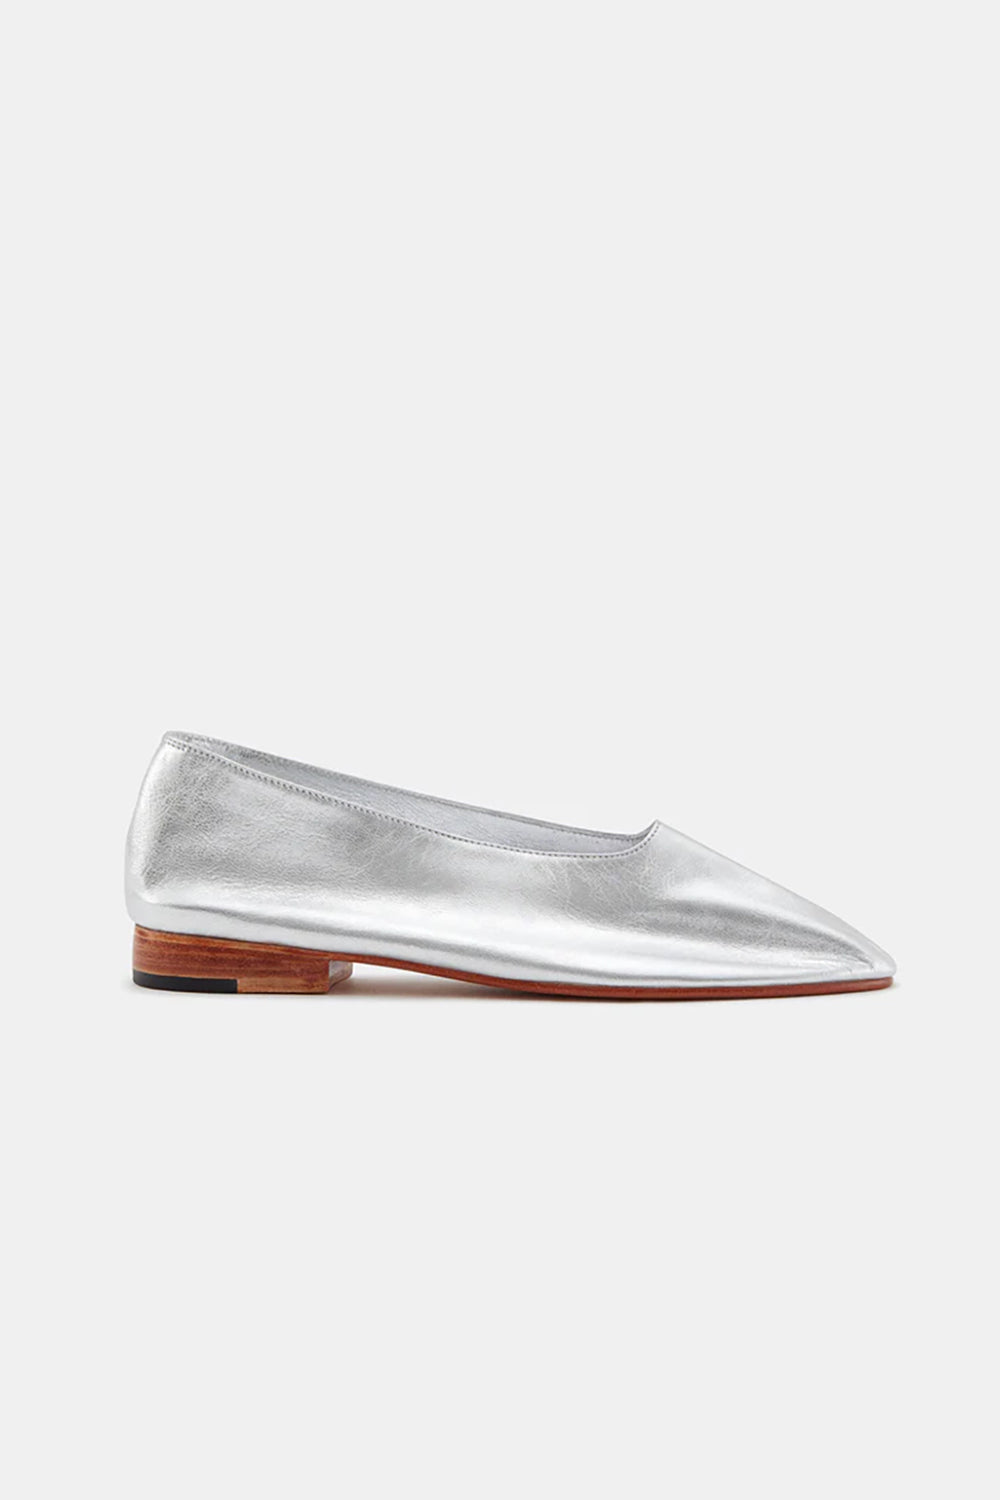 Martiniano Glove Shoe in Silver